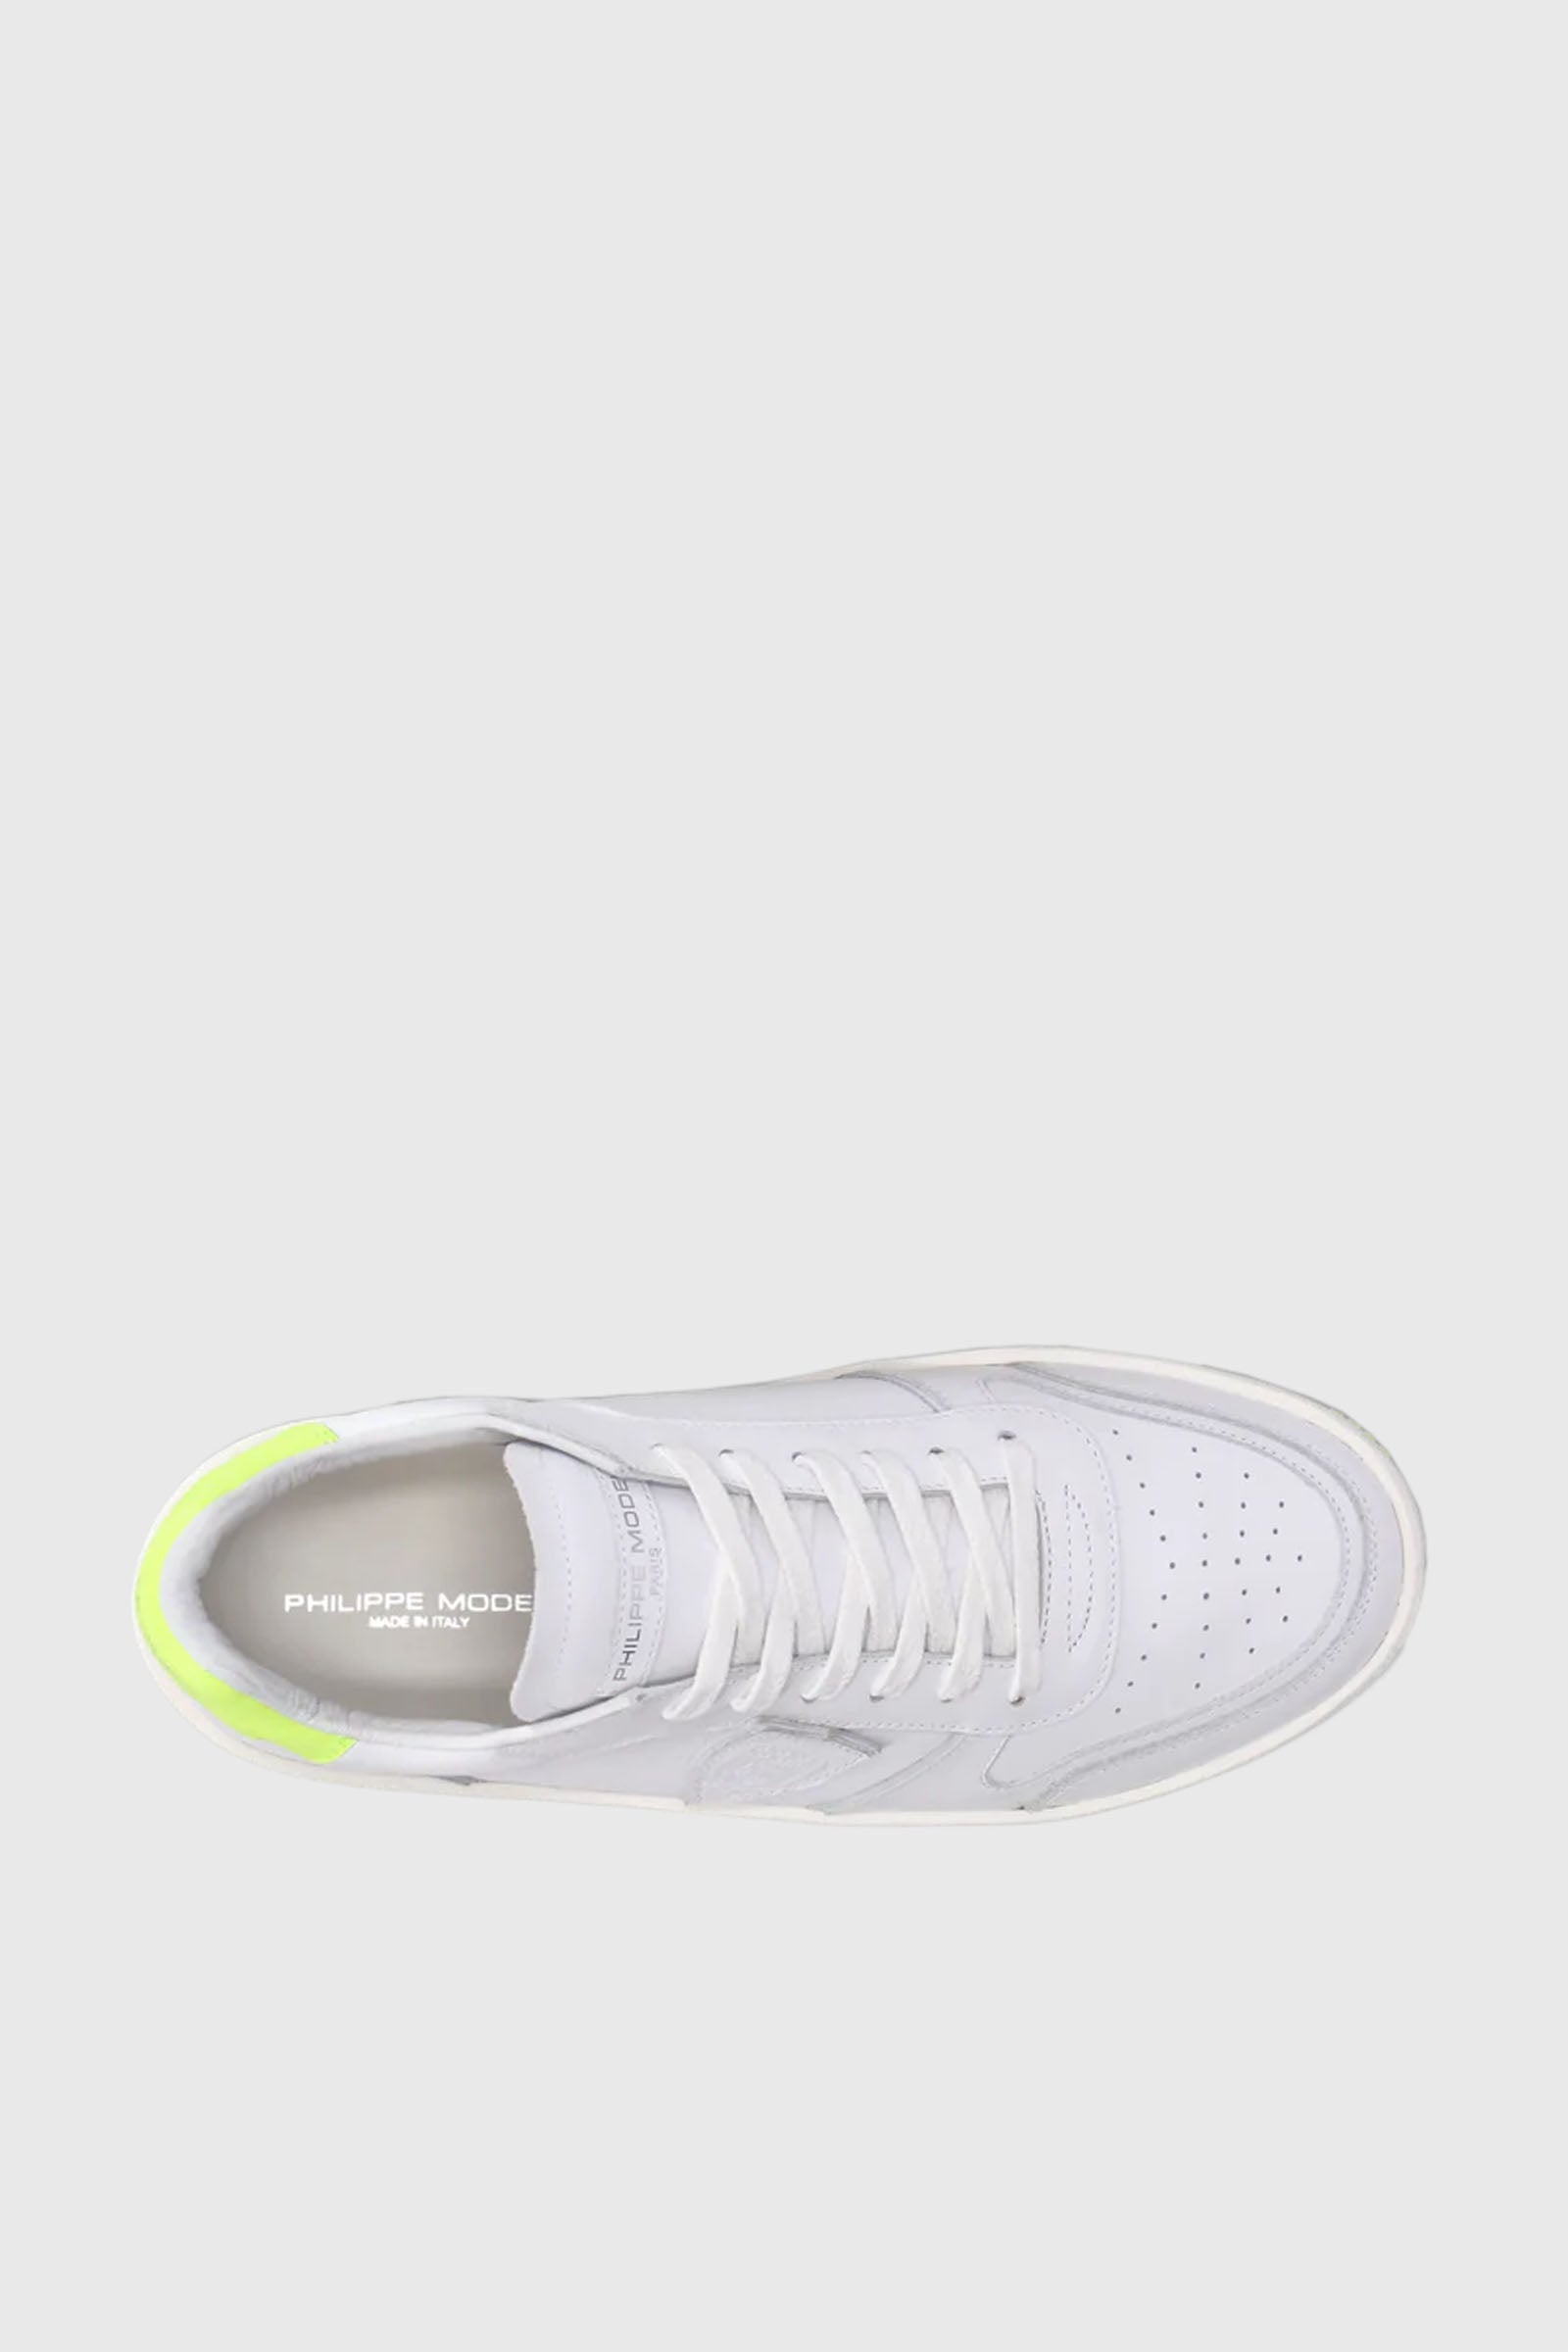 Philippe Model Sneaker Nice Veau Pelle Bianco/Giallo Fluo - 4